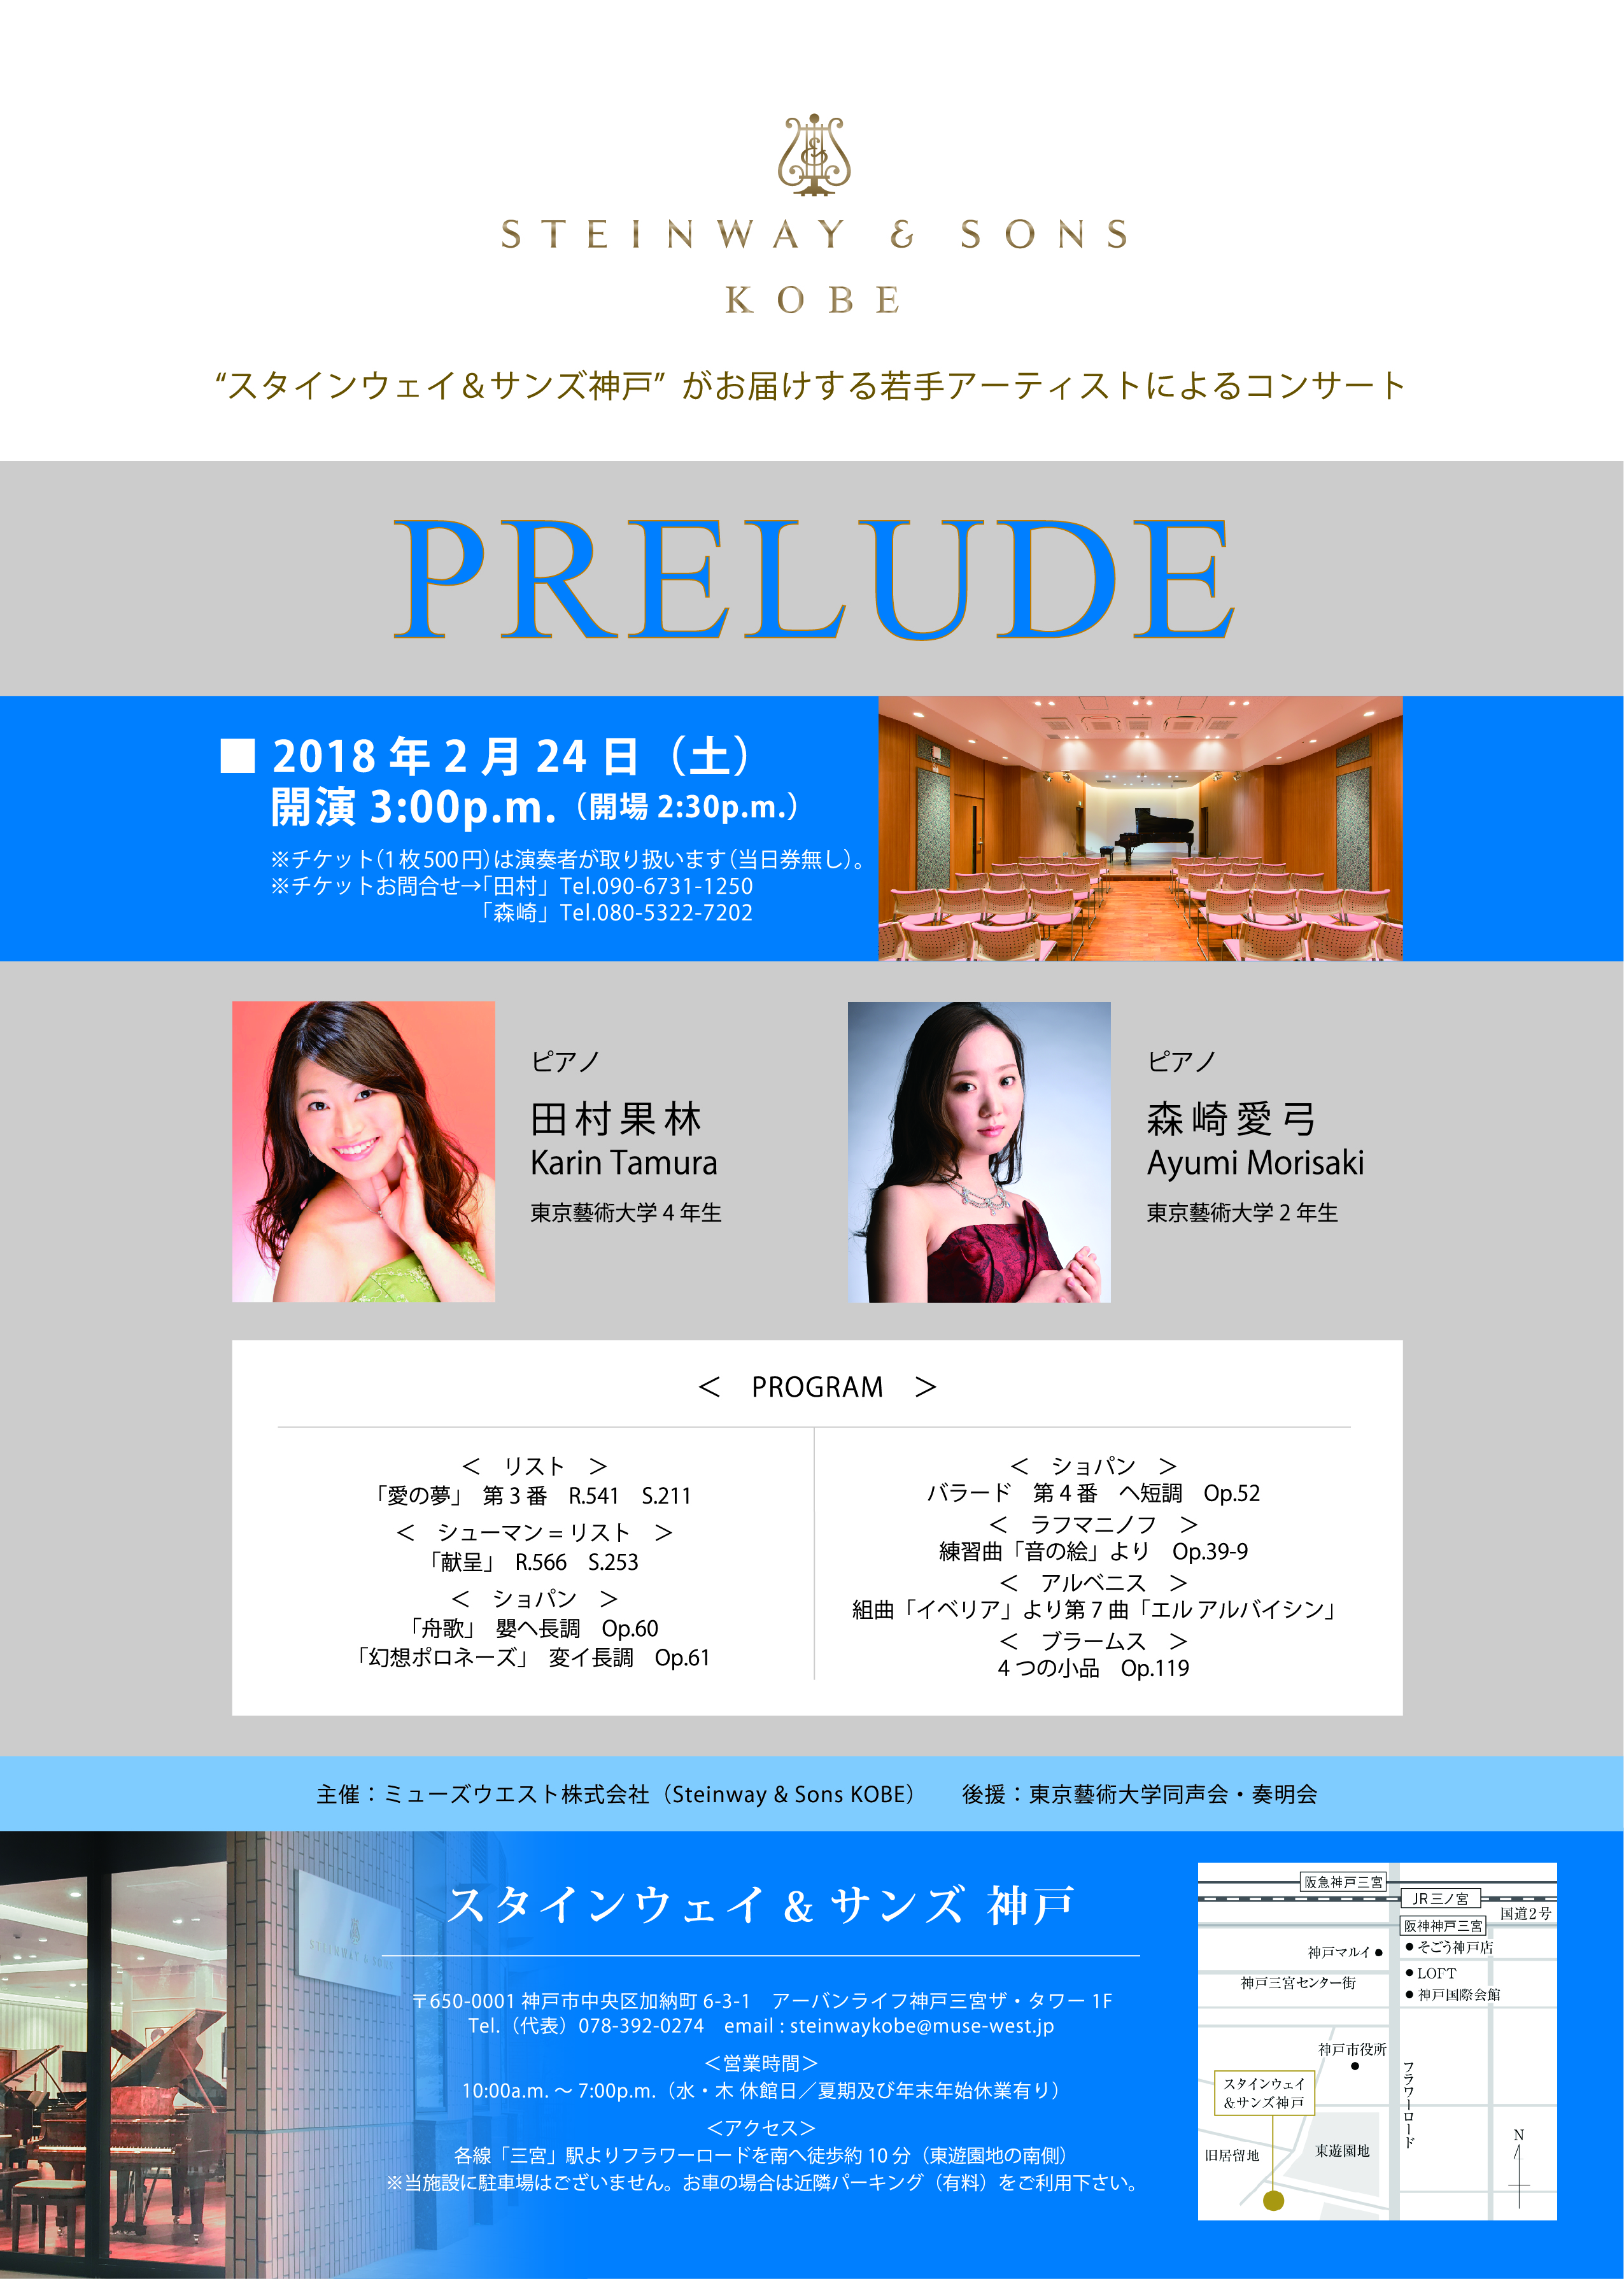 【PRELUDE】” ｽﾀｲﾝｳｪｲ&ｻﾝｽﾞ神戸 “がお届けする若手アーティストによるコンサート